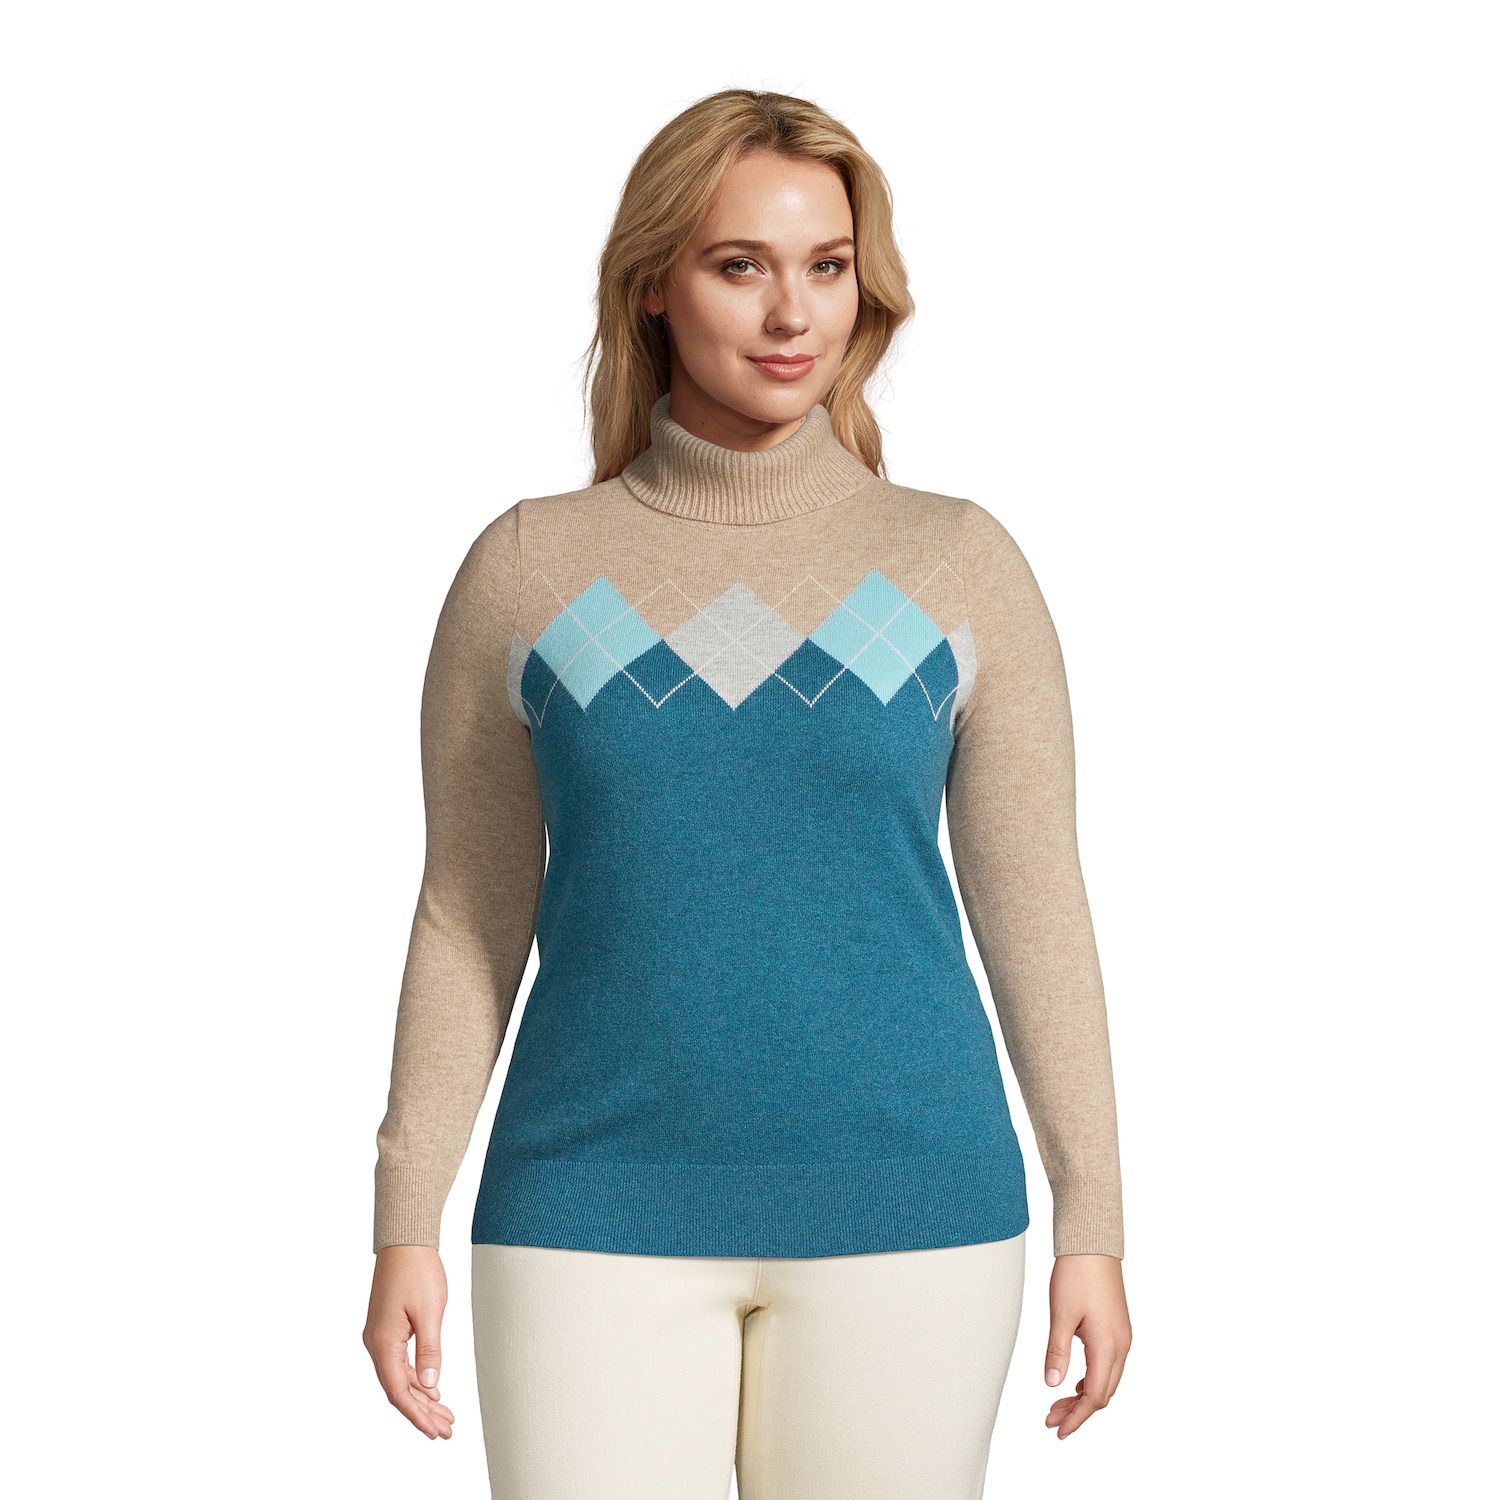 Image for Lands' End Plus Size Argyle Turtleneck Cashmere Sweater at Kohl's.